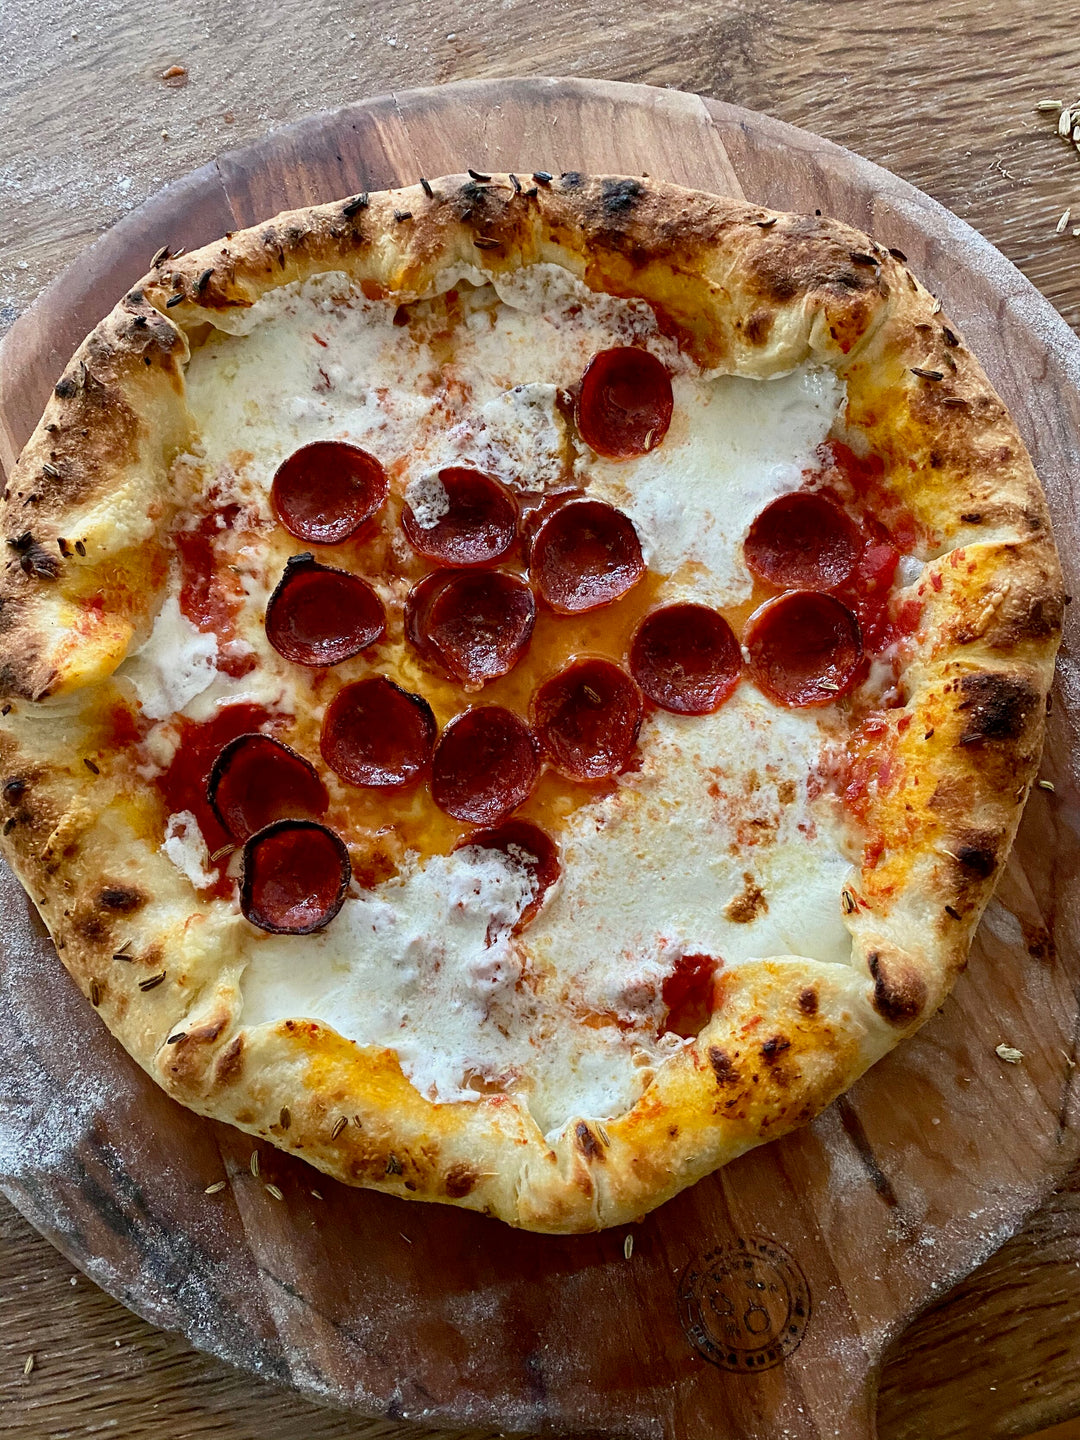 Stuffed Crust and Pepperoni Pizza Recipe